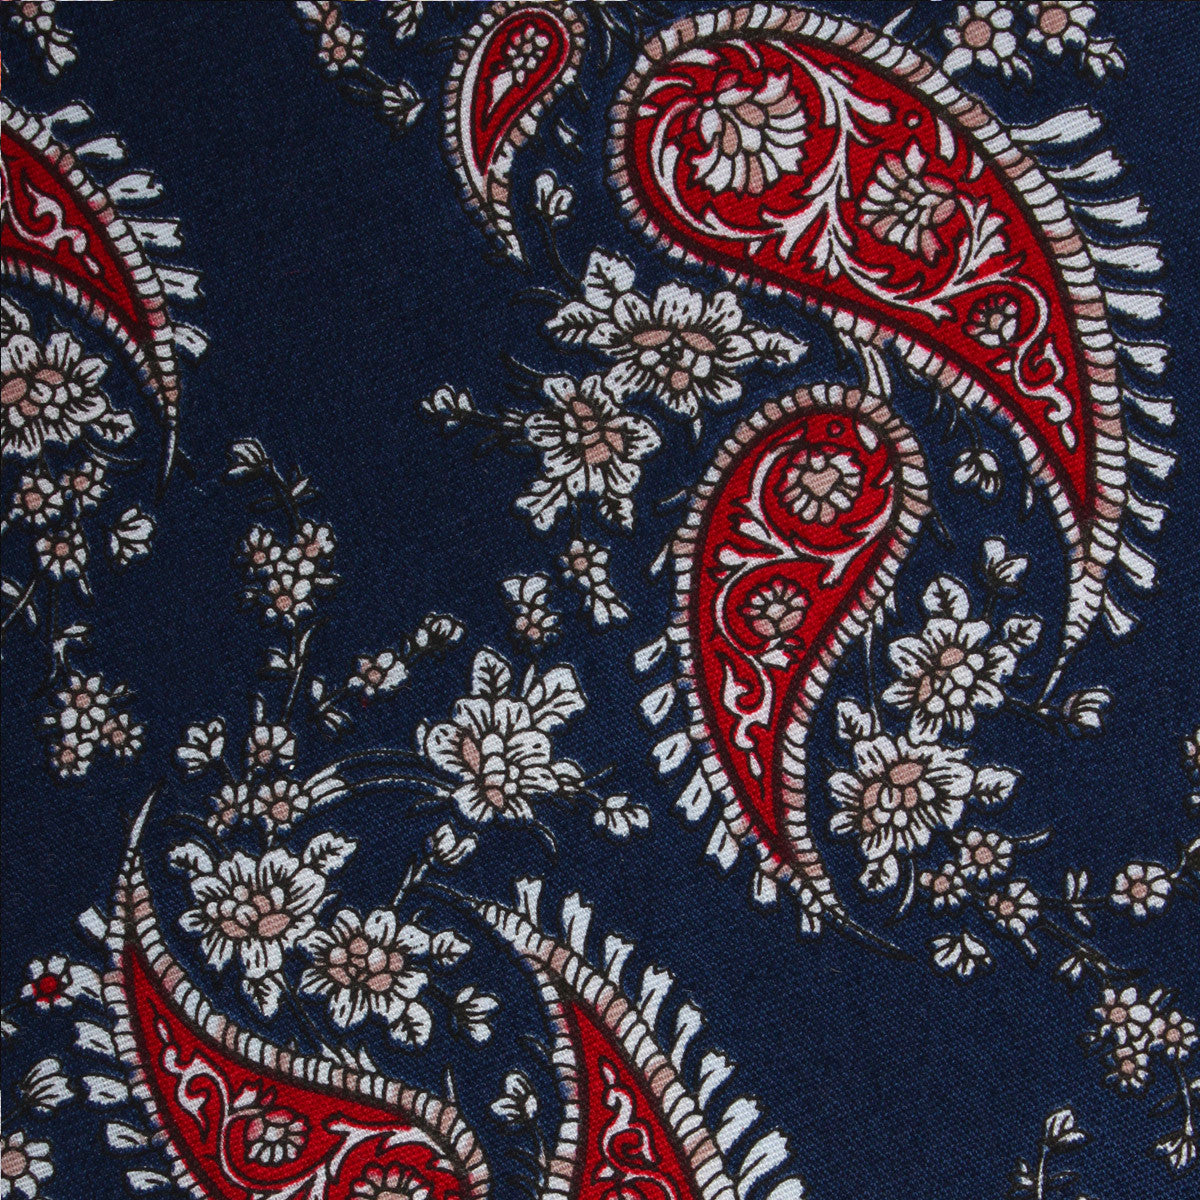 Trasimeno Blue with Red Paisley Fabric Necktie